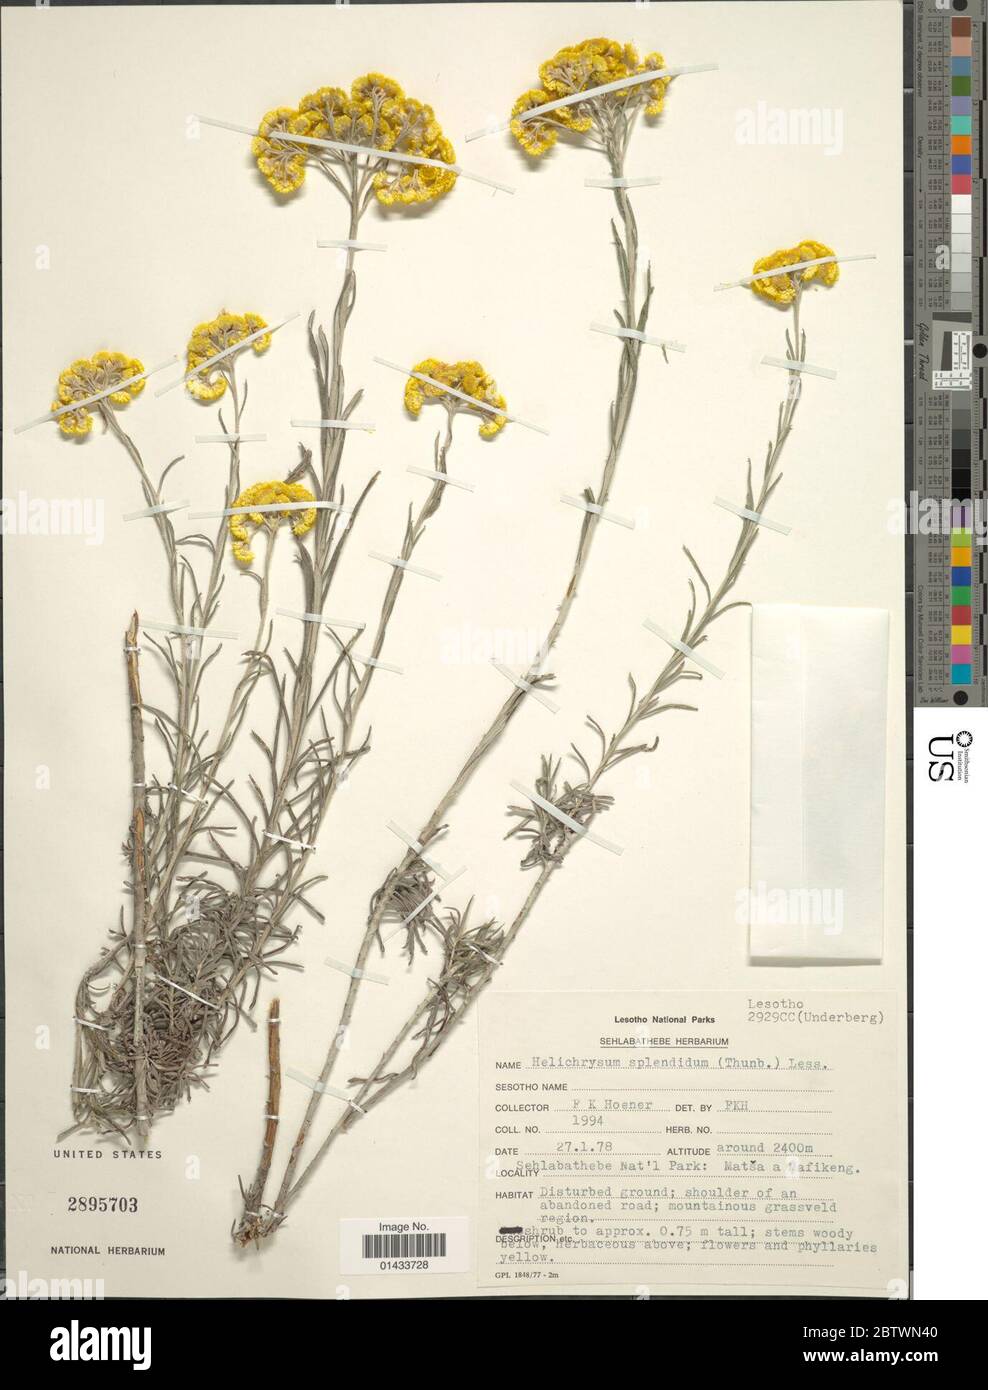 Helichrysum splendidum Thunb Less. Stock Photo